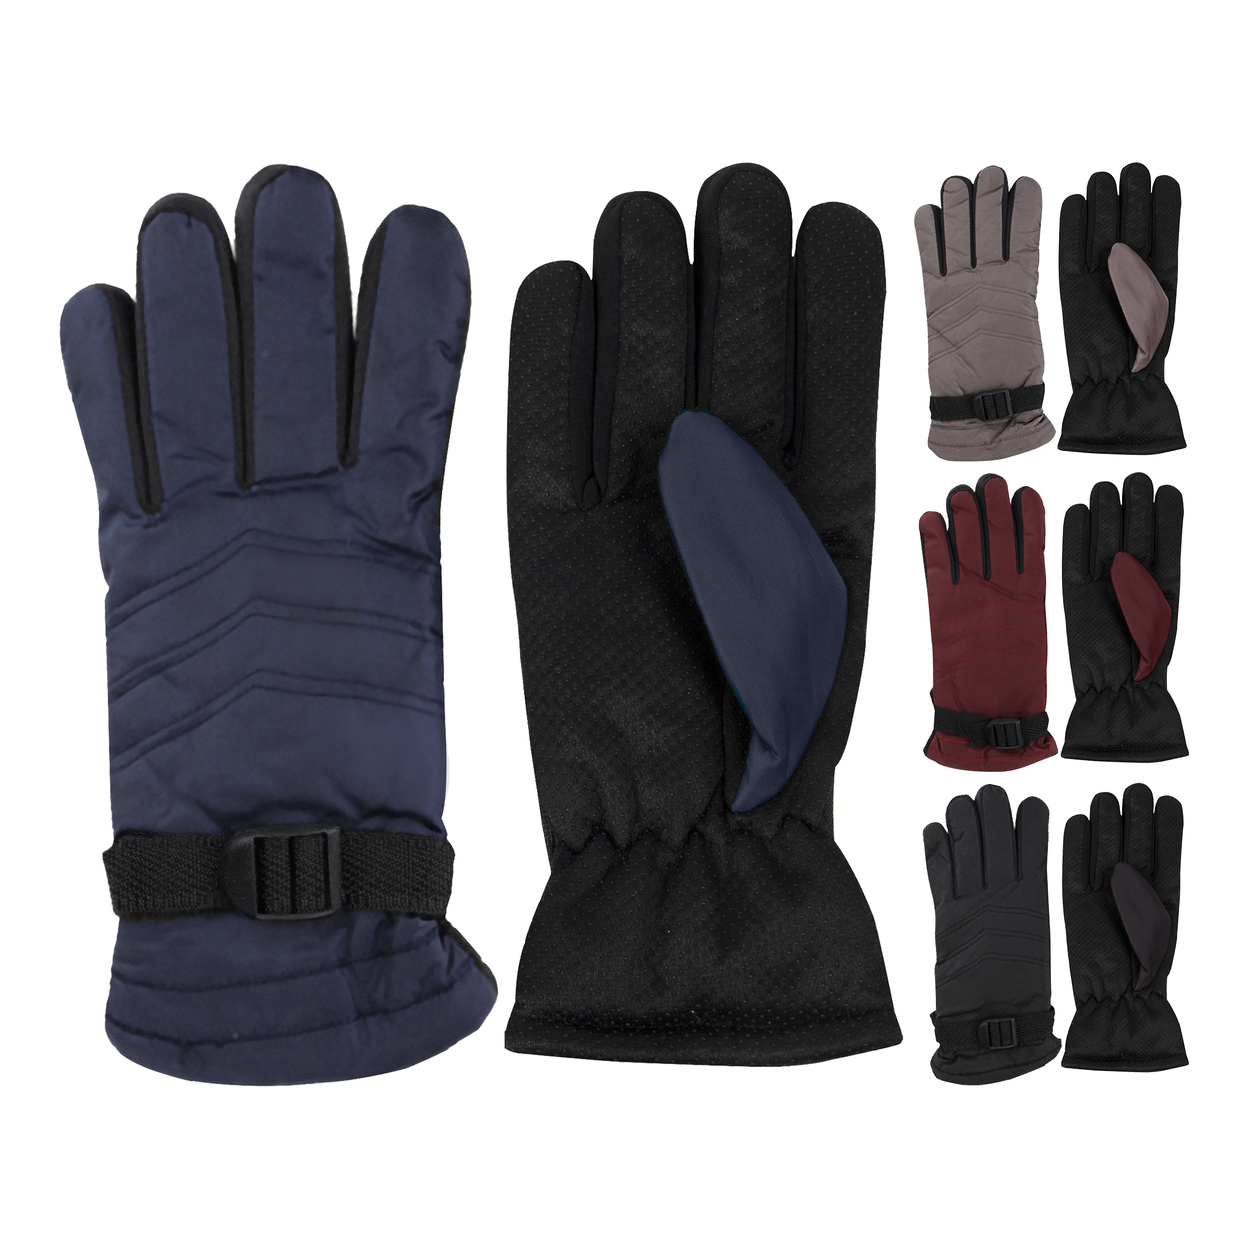 3-Pairs Women's Cozy Fur Lined Snow Ski Warm Winter Gloves - Black/grey/blue